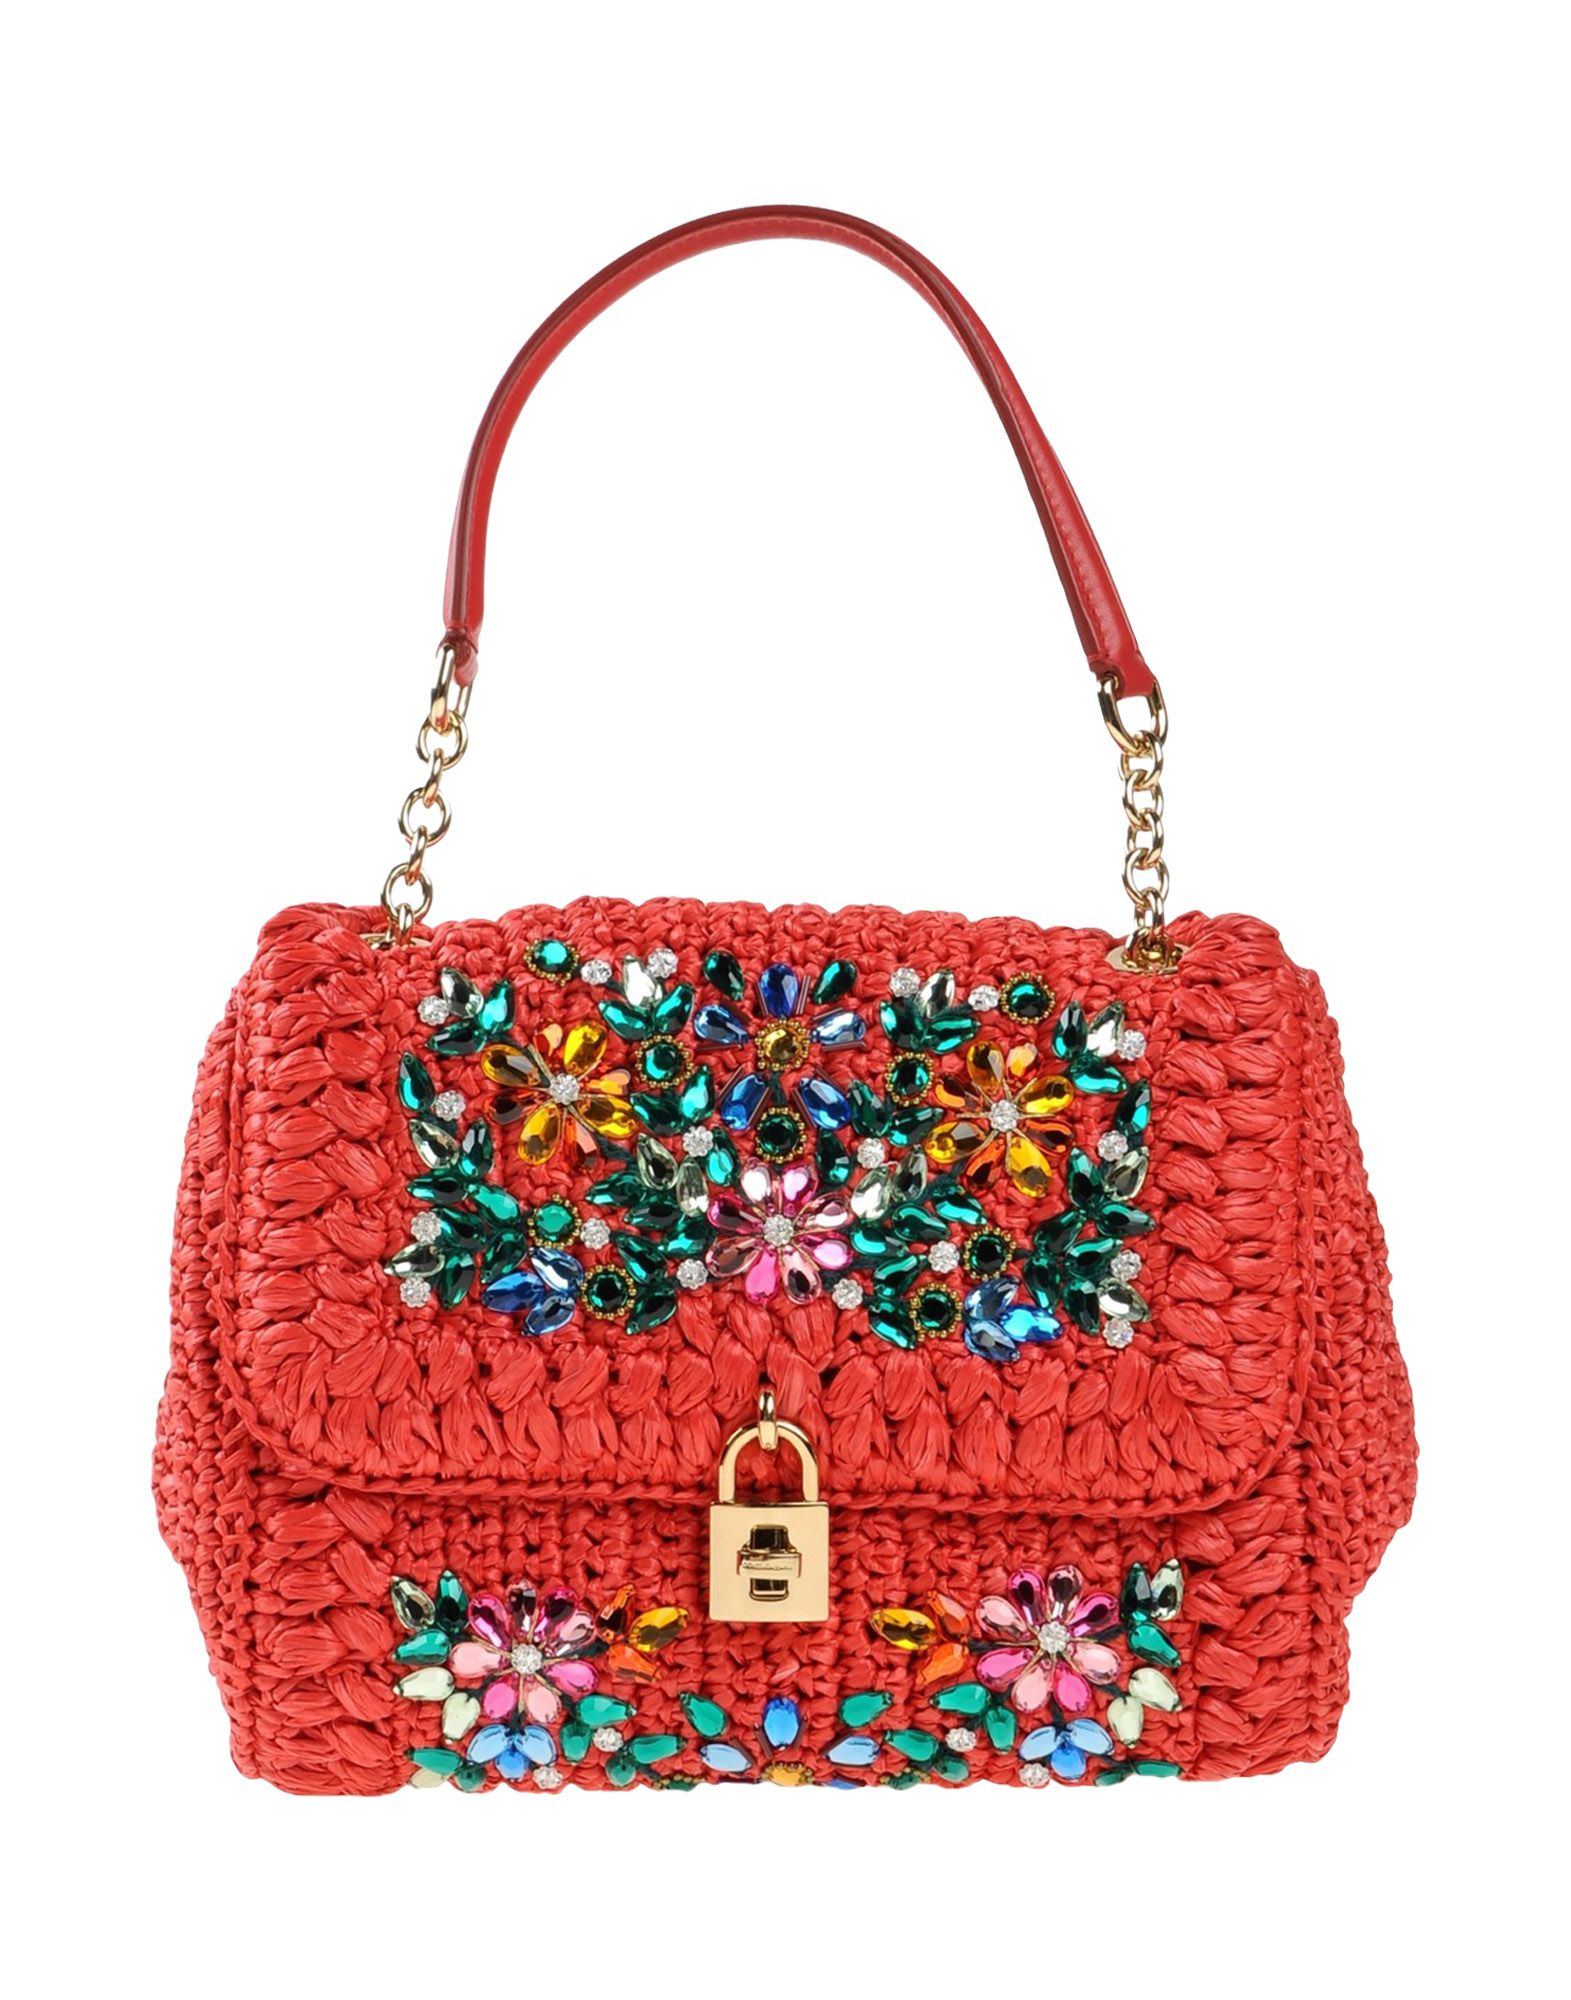 Lyst - Dolce & Gabbana Handbag in Red